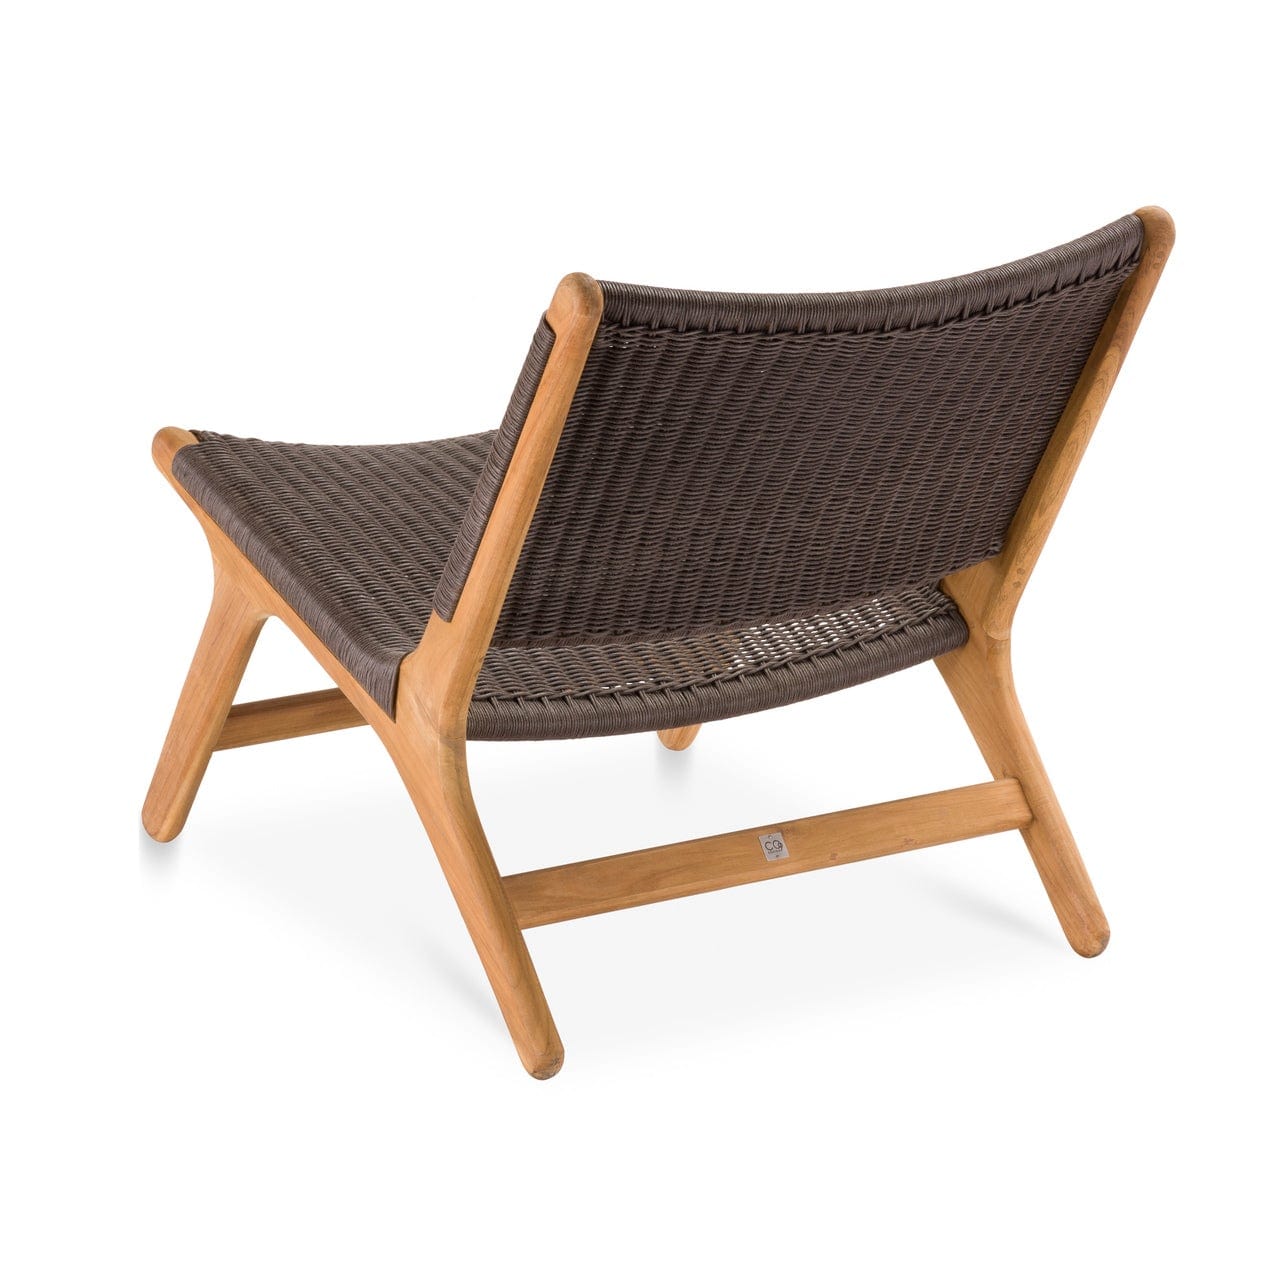 CO9 Design Outdoor Chair Arden Chair, Brown/Sea Salt - Set of 2